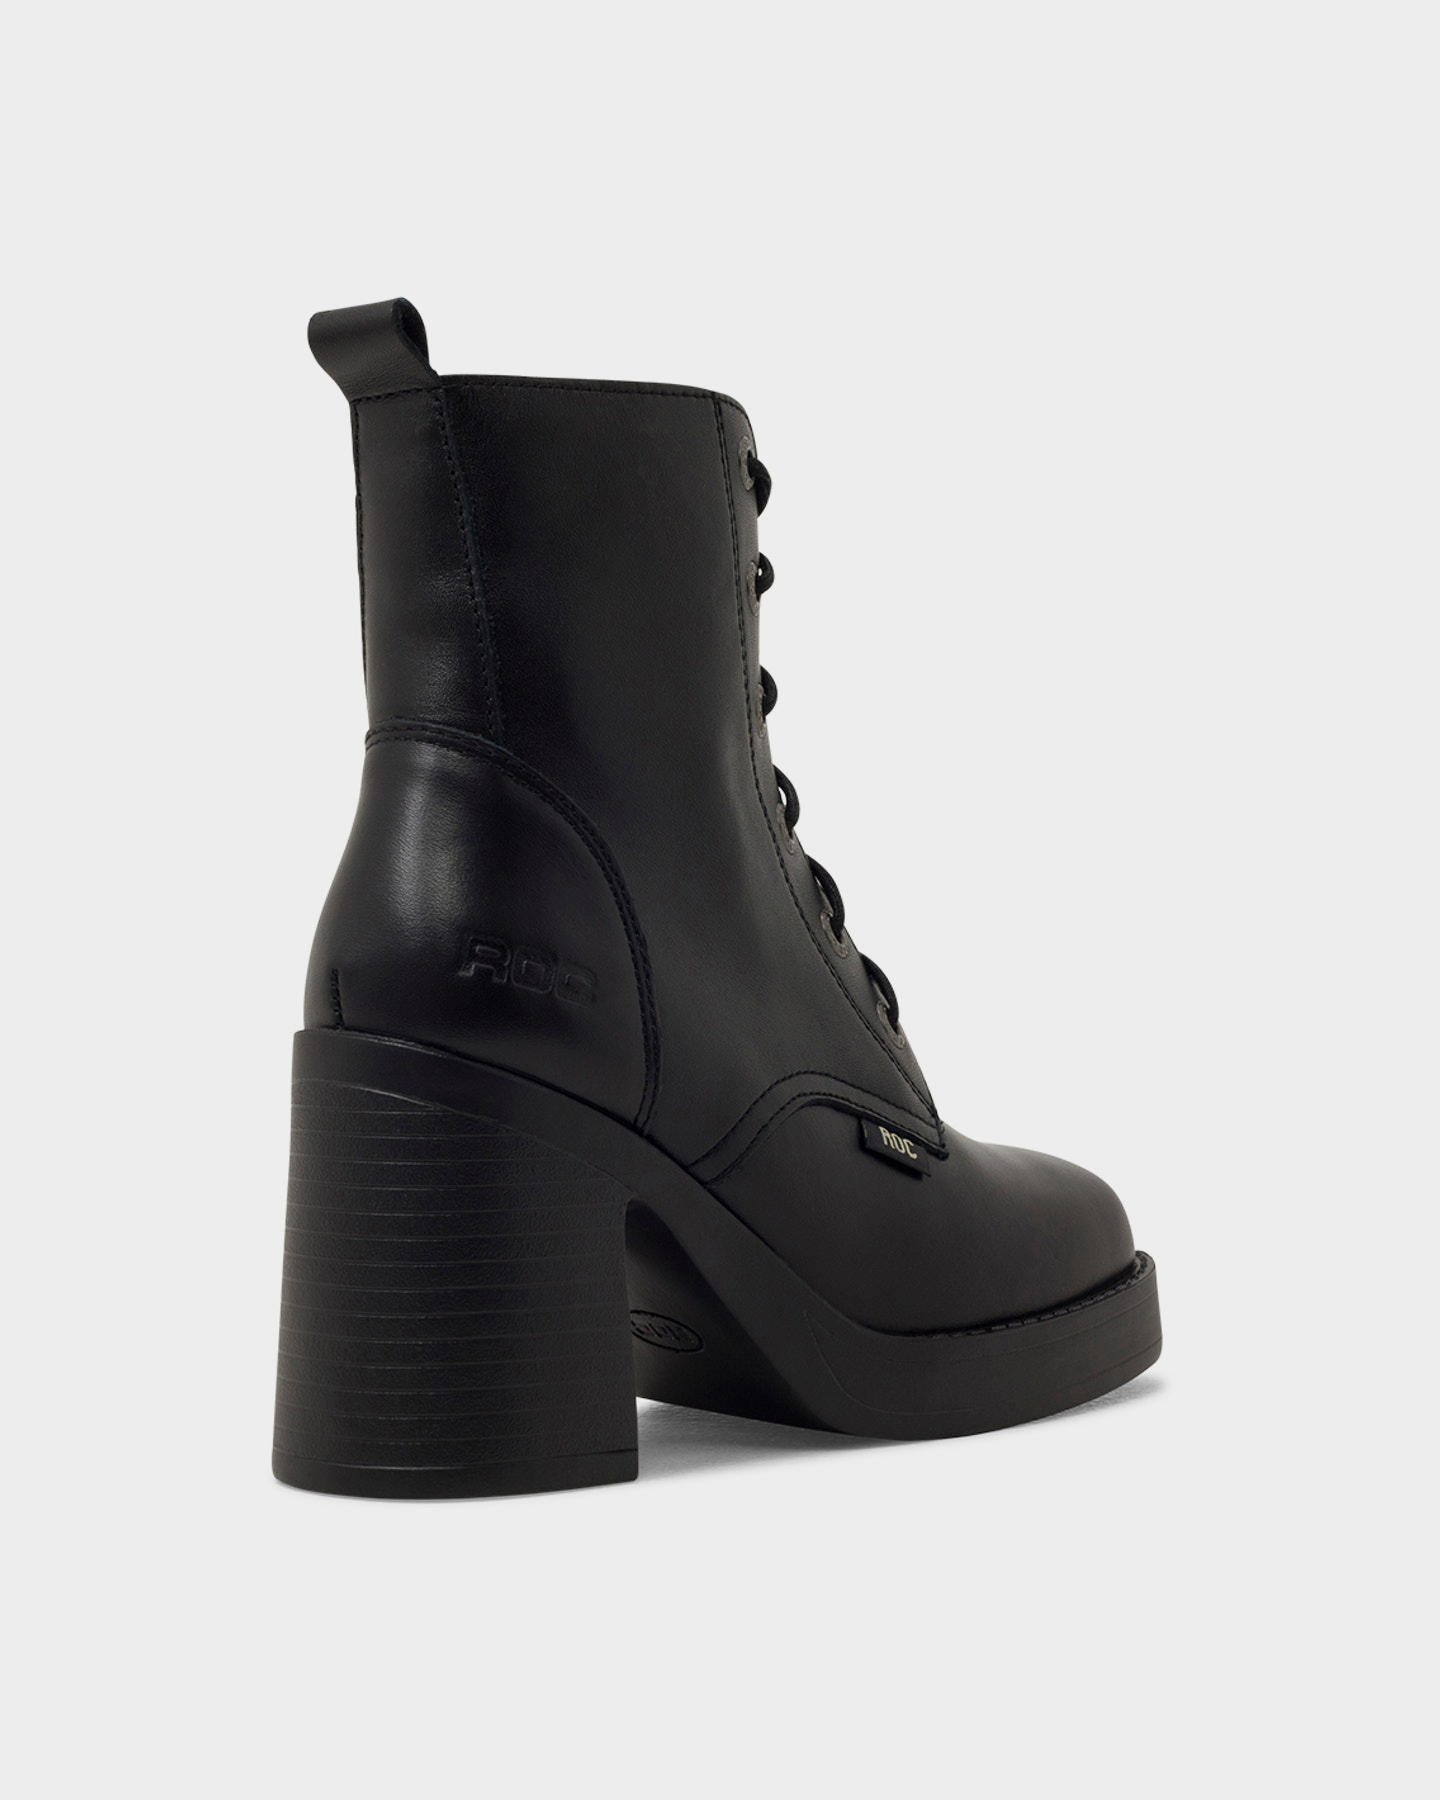 Roc Boots Intent - Black Leather | SurfStitch